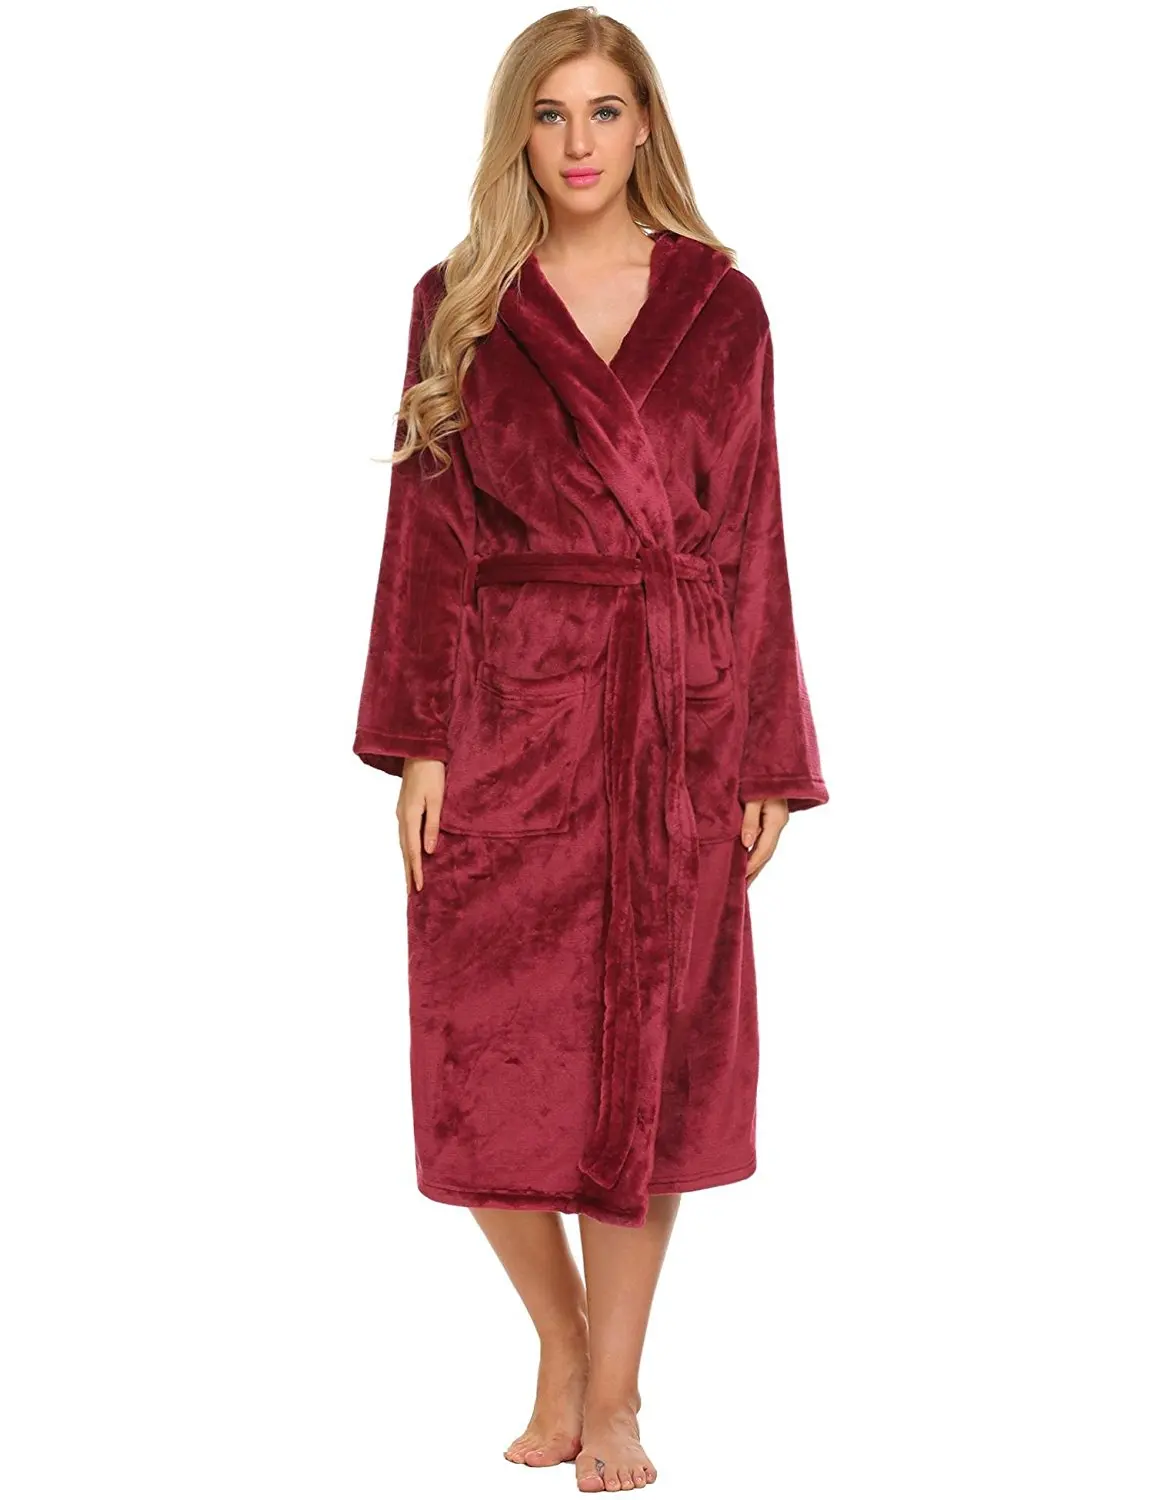 Buy Goldenfox Women Hooded Long Sleeve Soft Plush Bathrobe Sleepwear ...